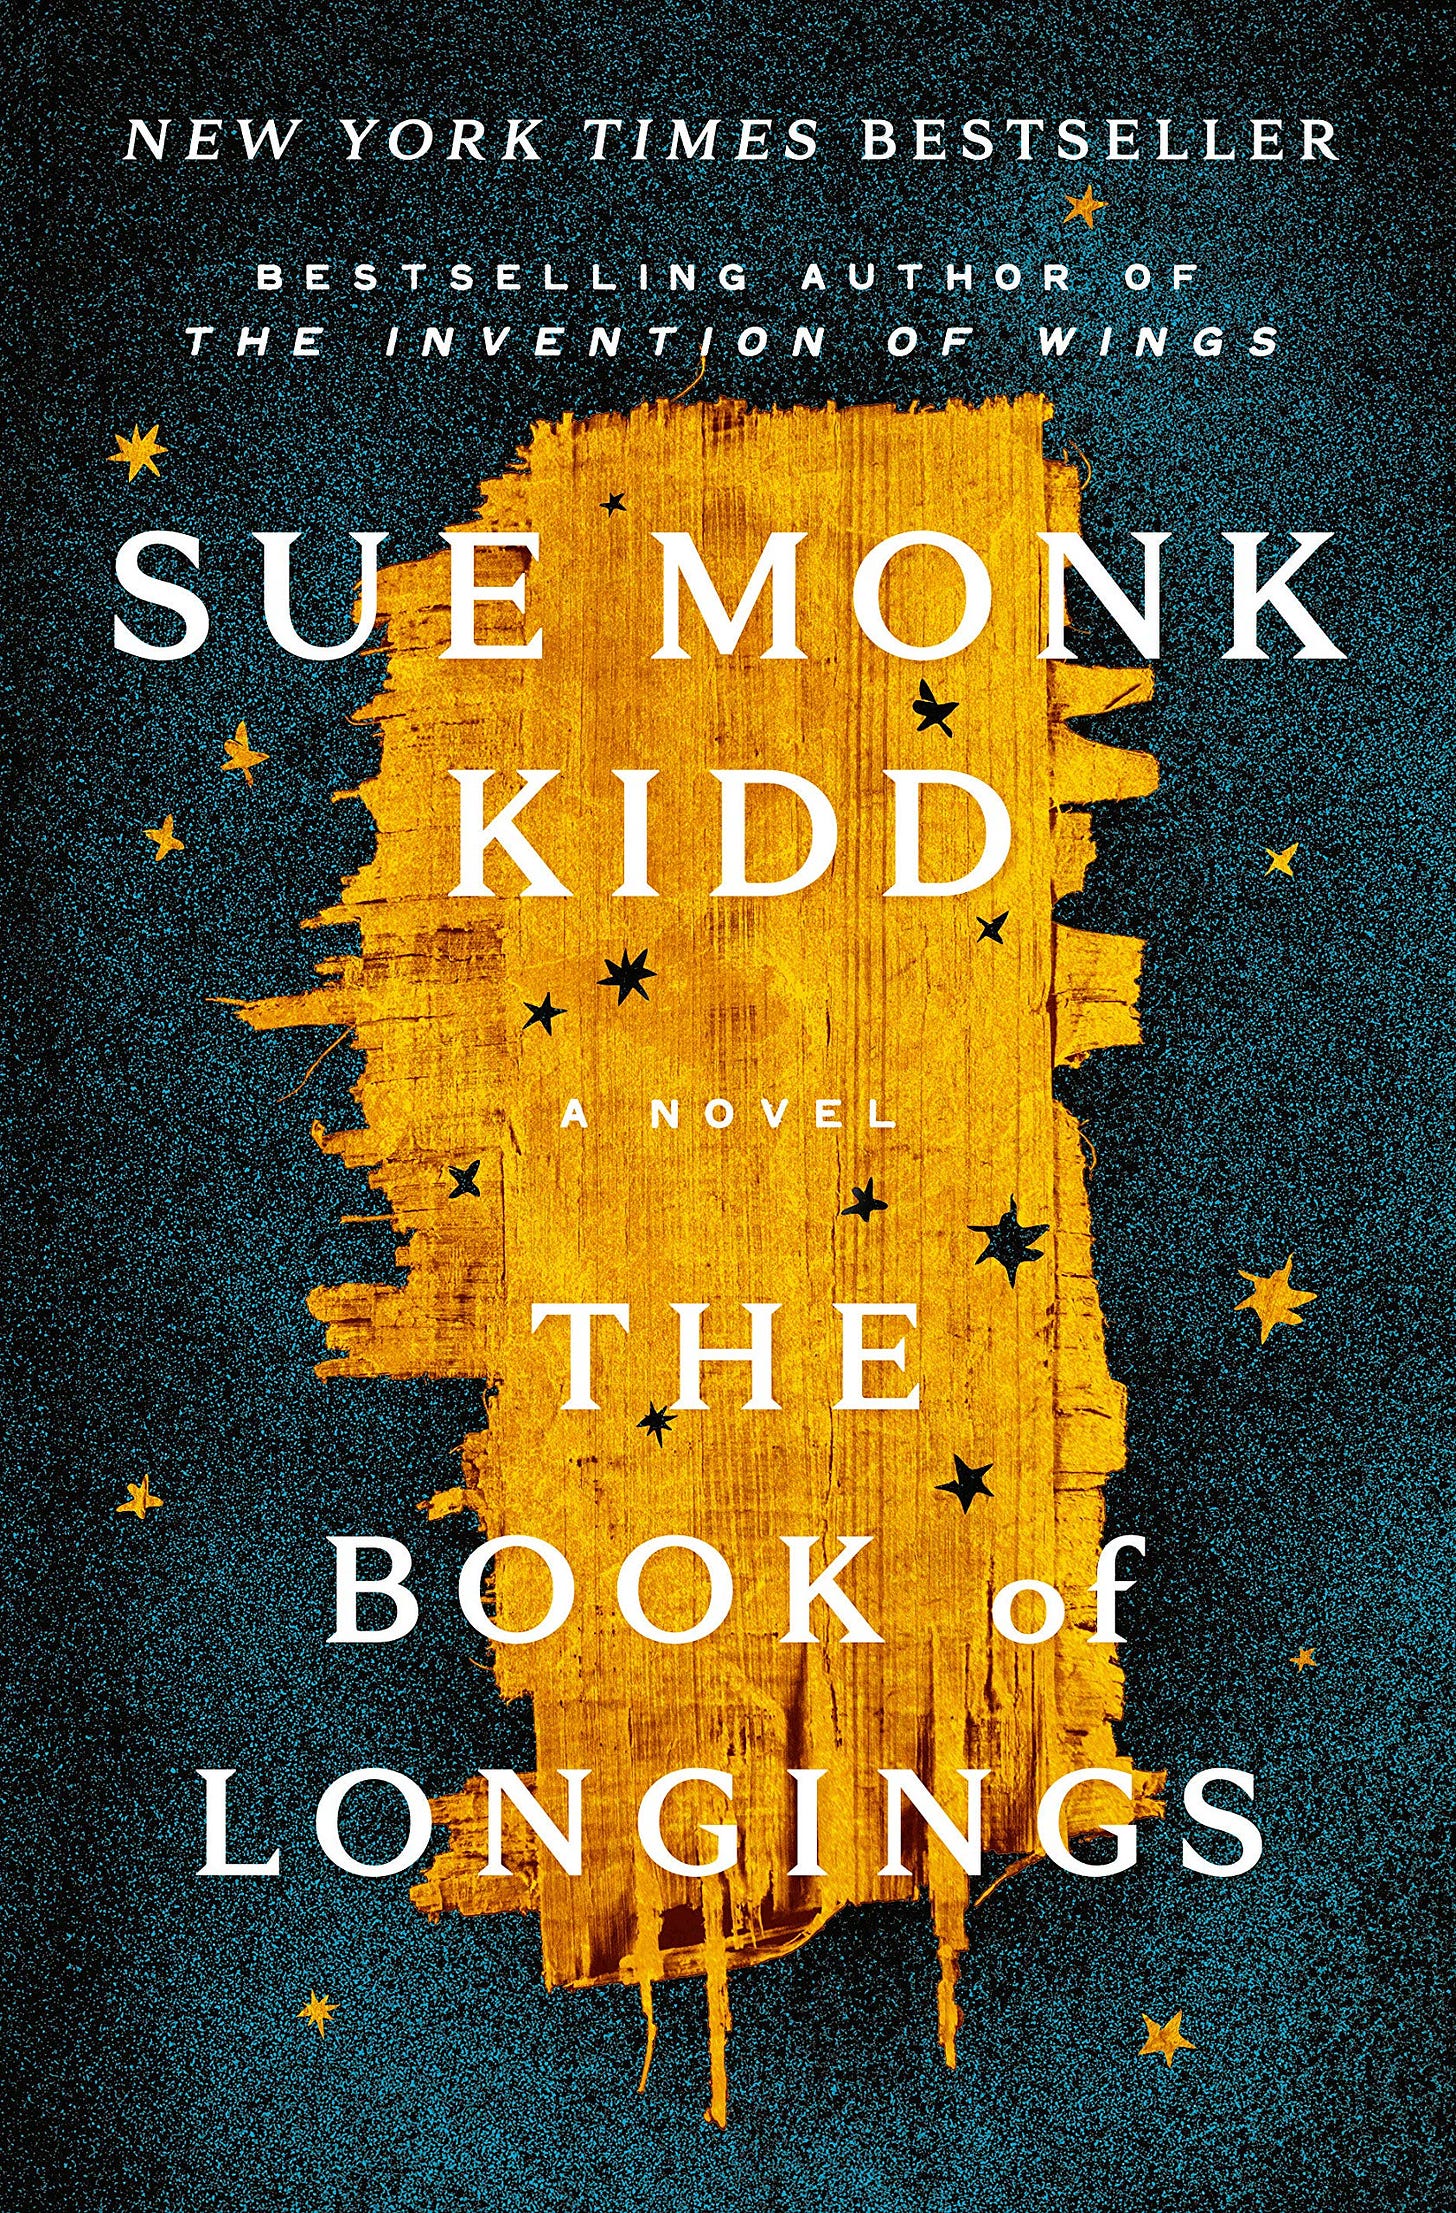 Amazon.com: The Book of Longings: A Novel: 9780525429760: Kidd, Sue Monk:  Books